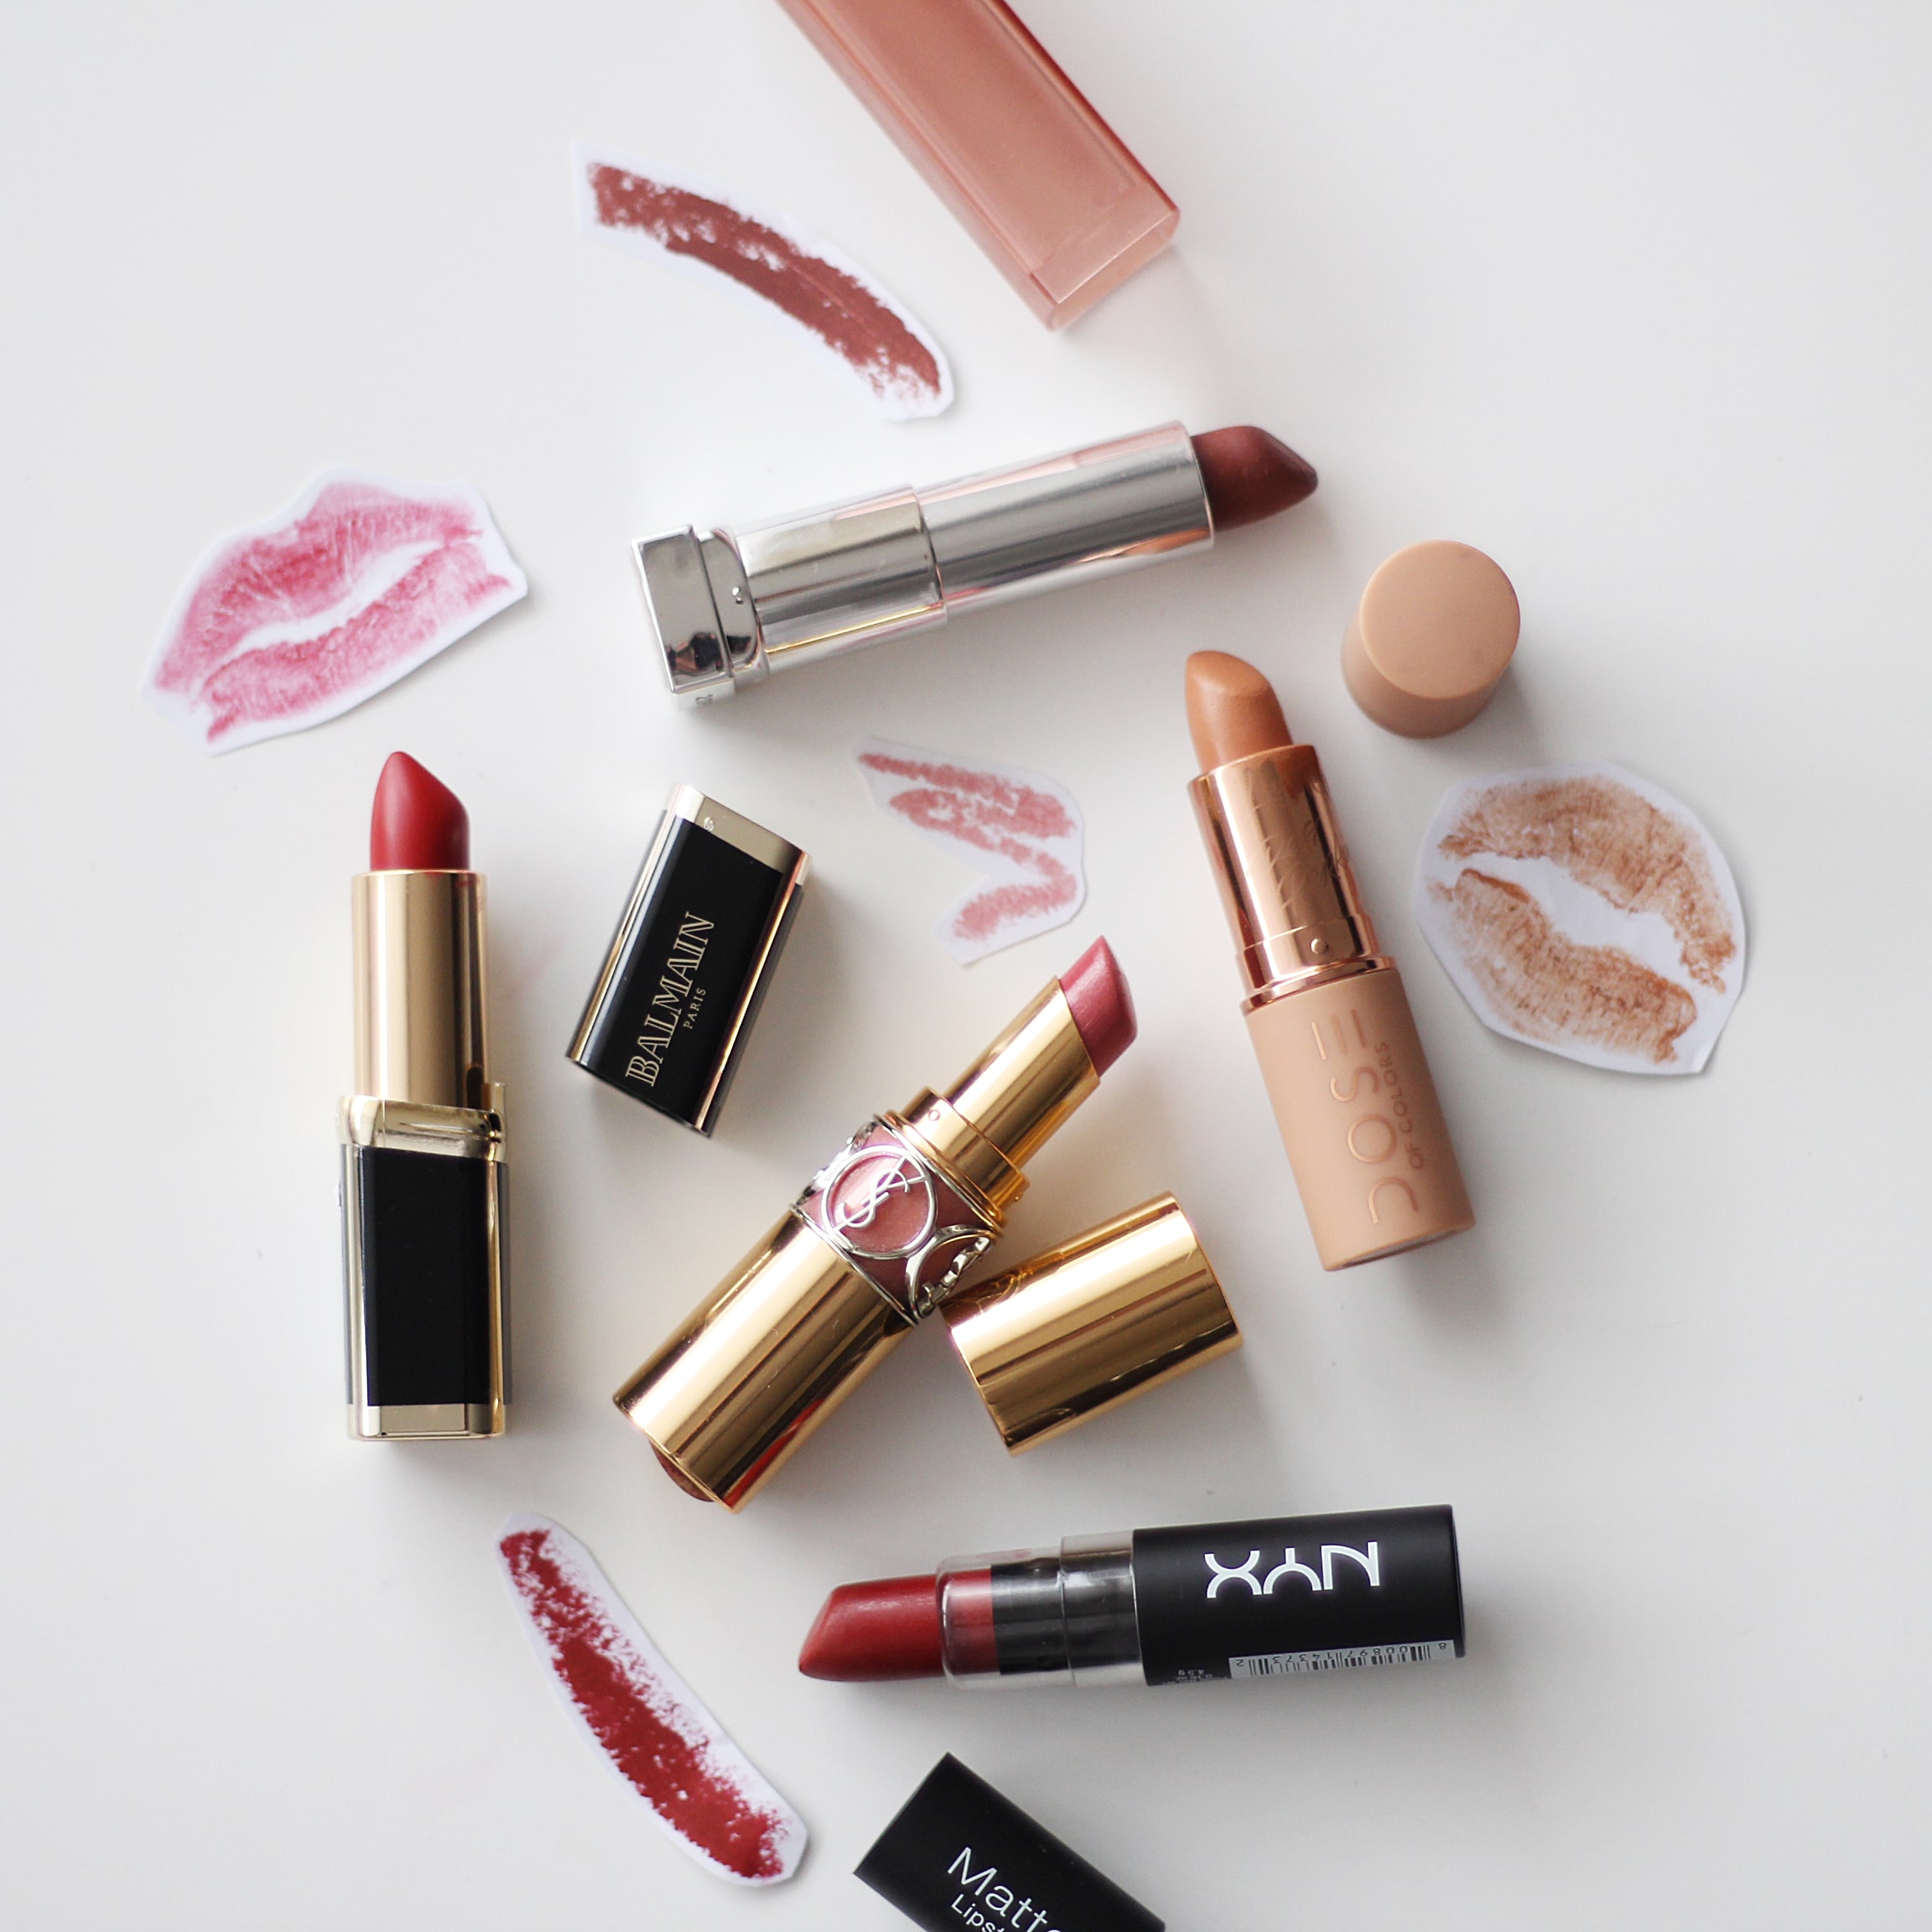 La ruleta de lipsticks - makeup challenge